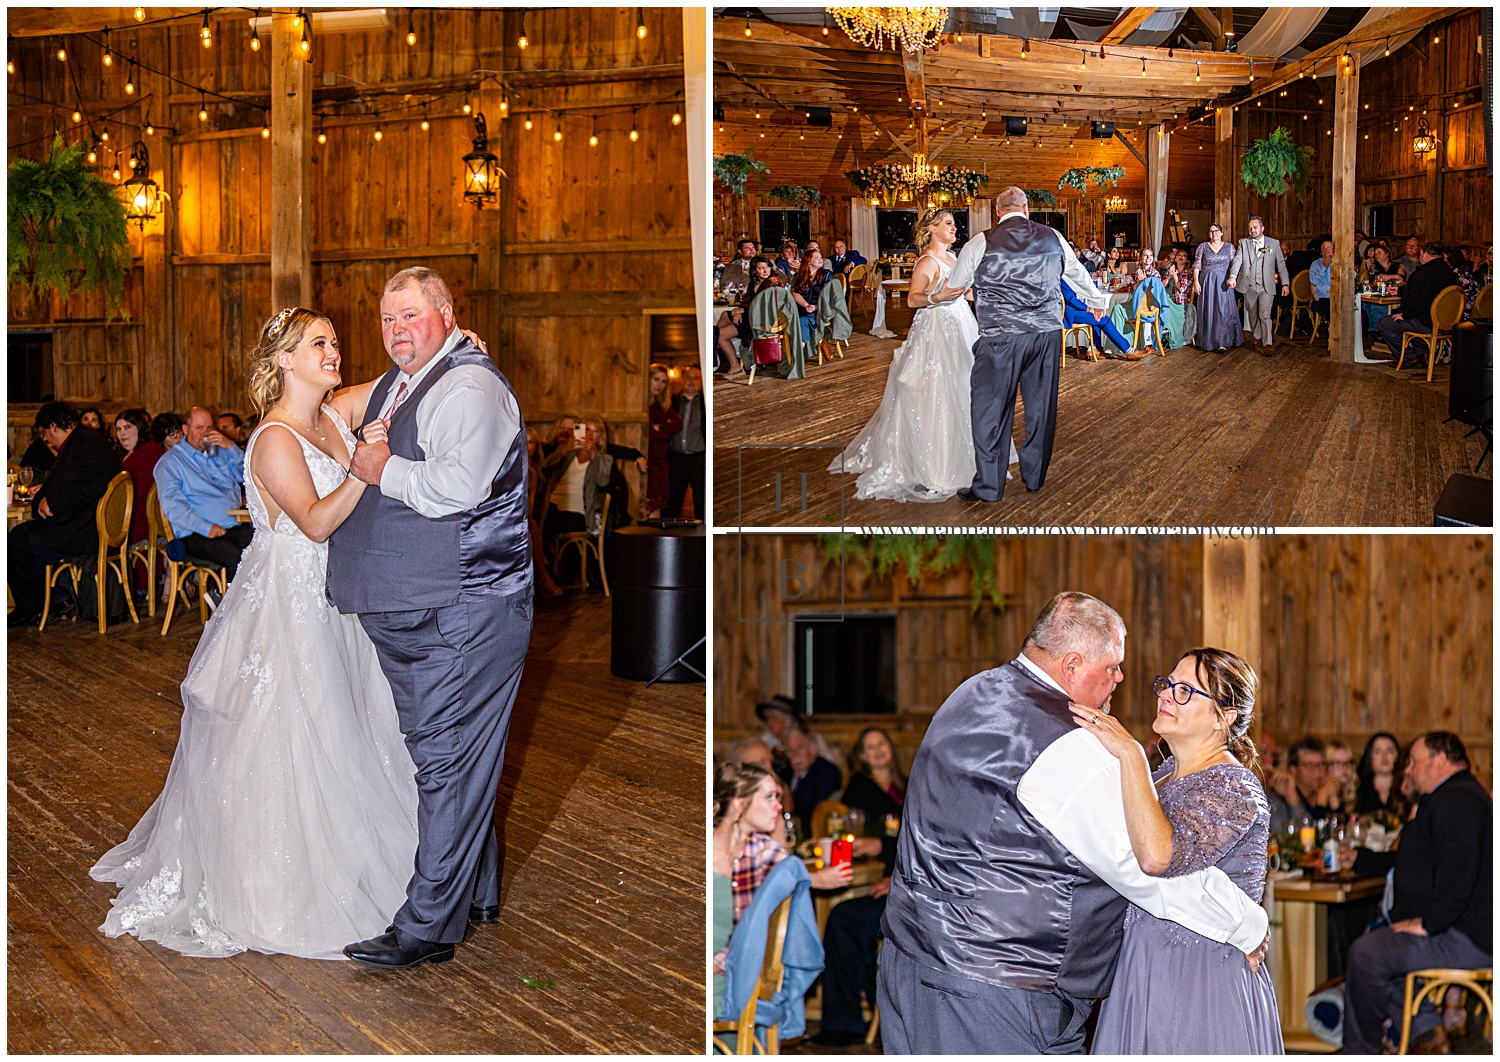 Couple dances with parents at wedding reception.